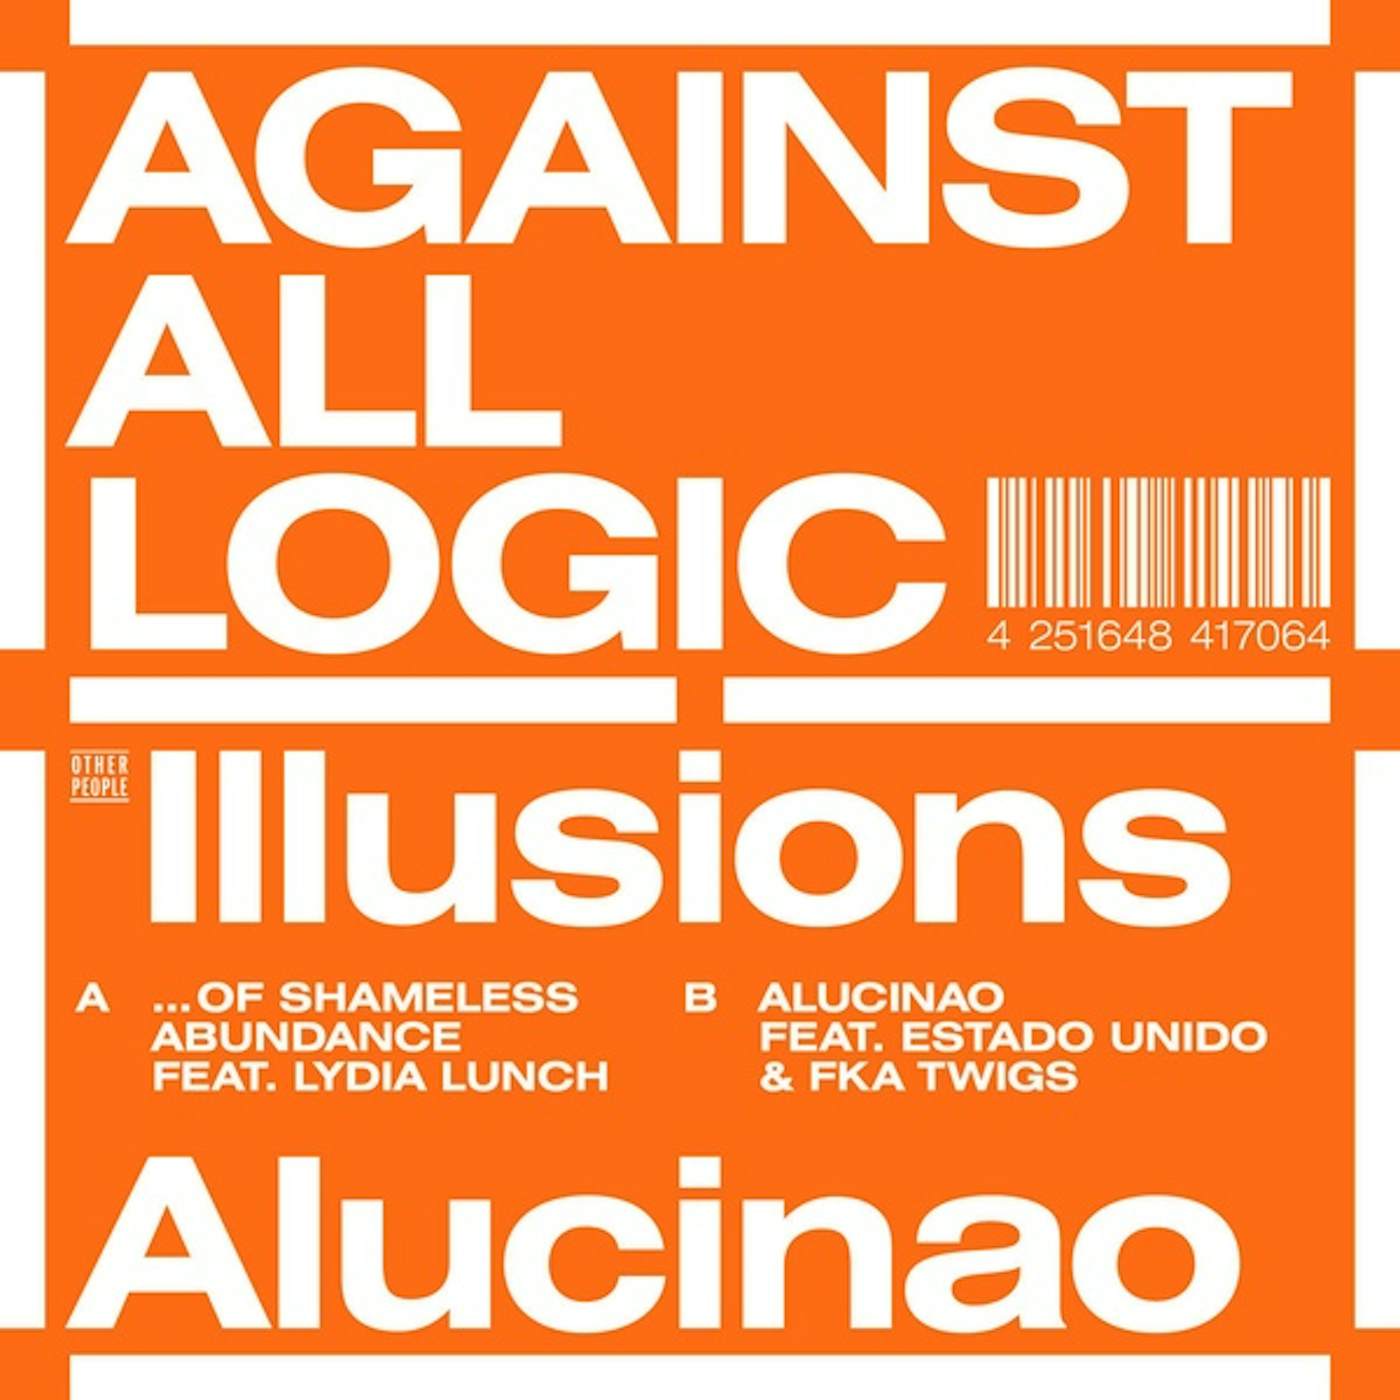 Against All Logic Illusions Of Shameless Abundance/Alucinao Vinyl Record